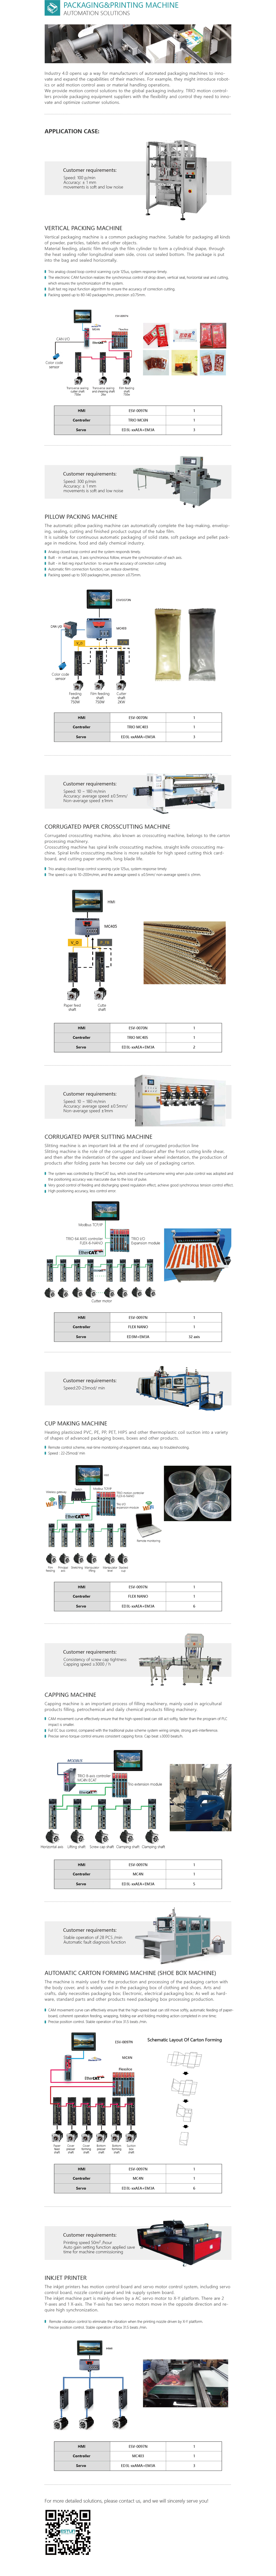 行业-Packaging&printing machine-01.jpg